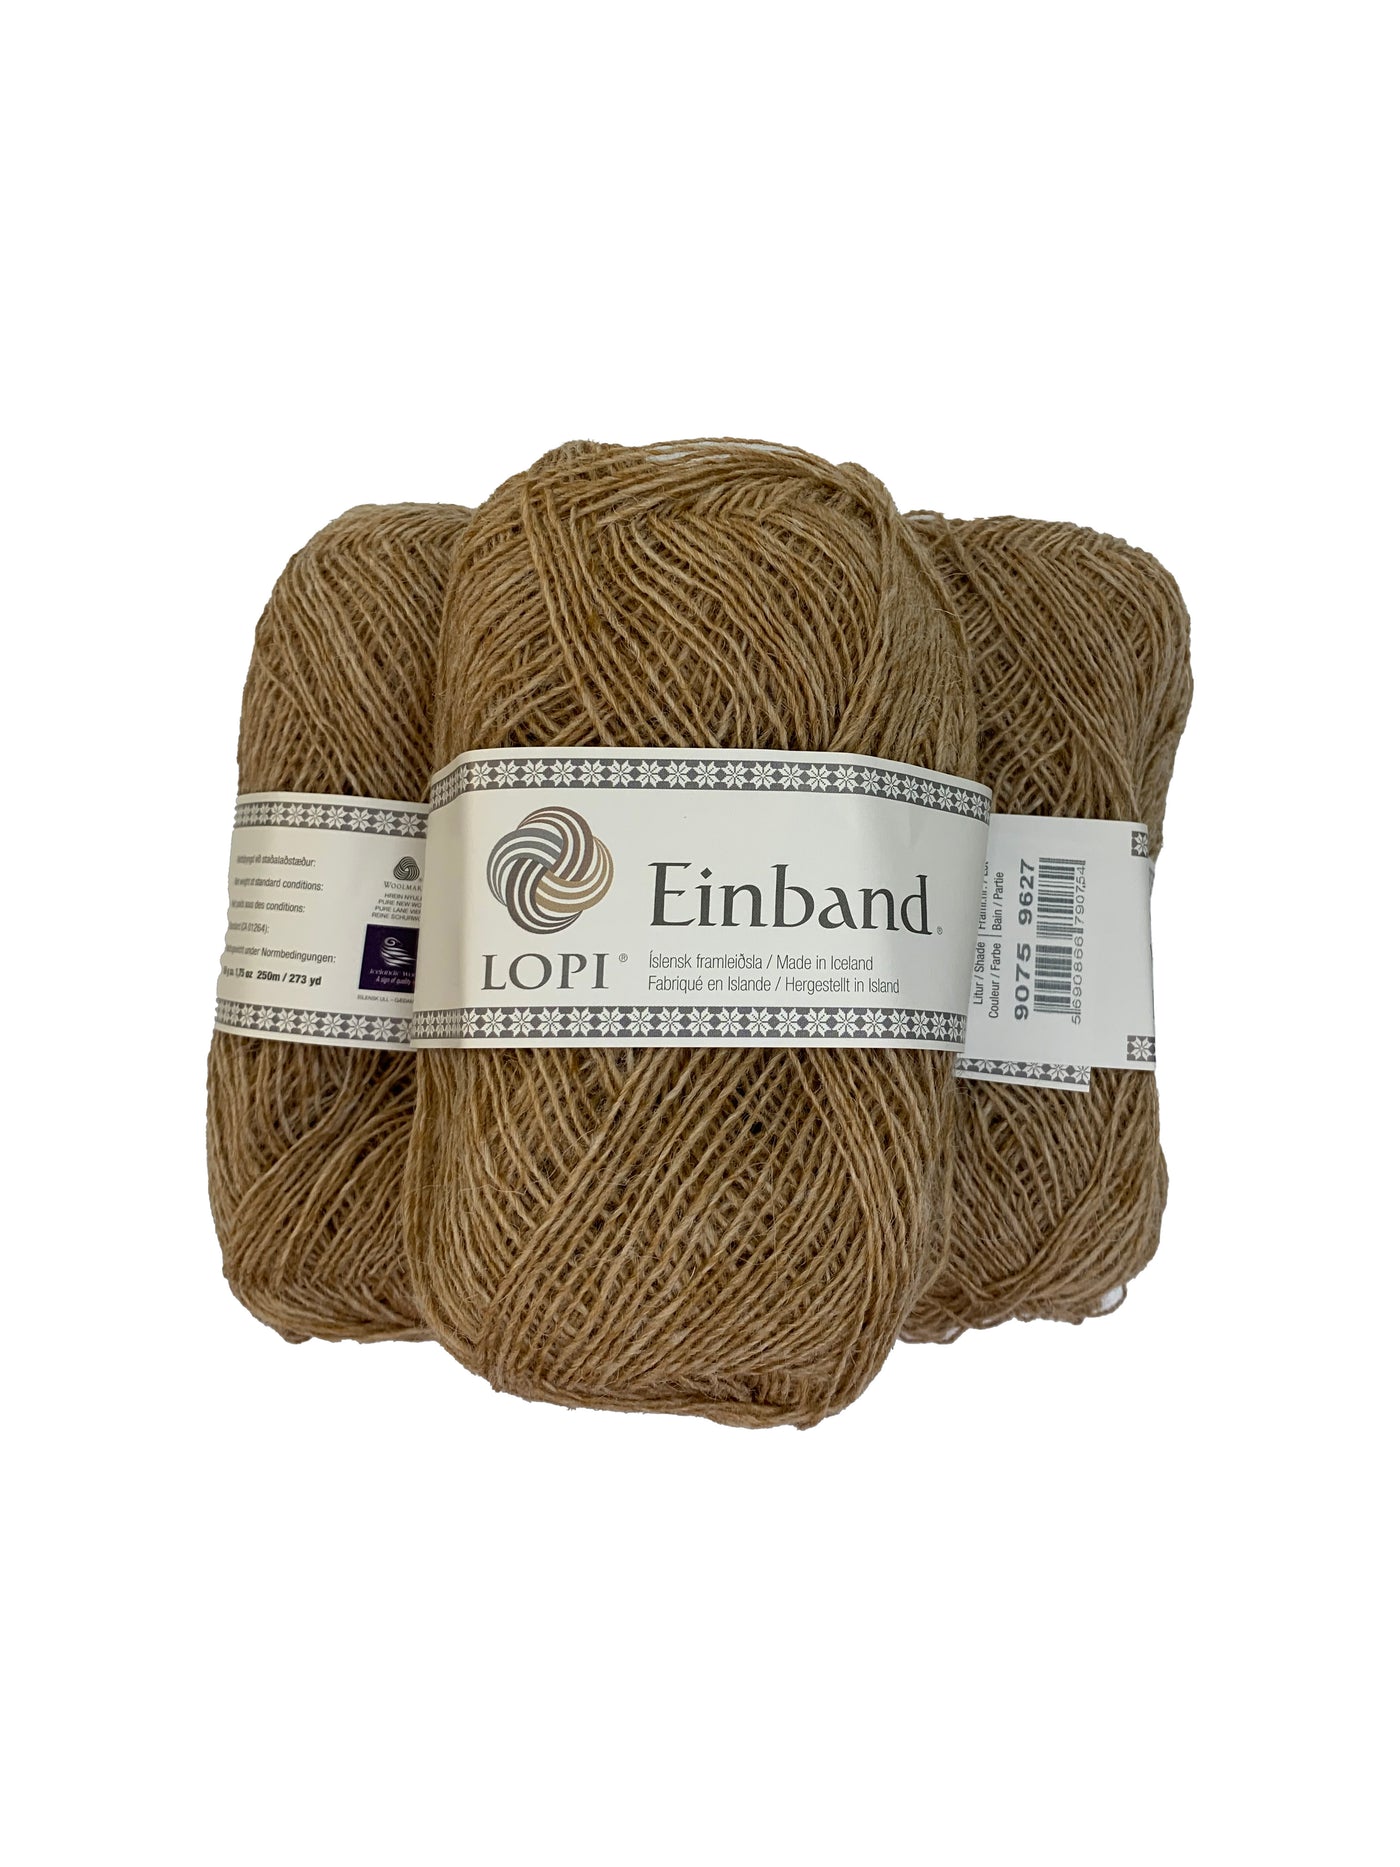 Istex Lopi Einband Icelandic Wool Lace Knitting Yarn